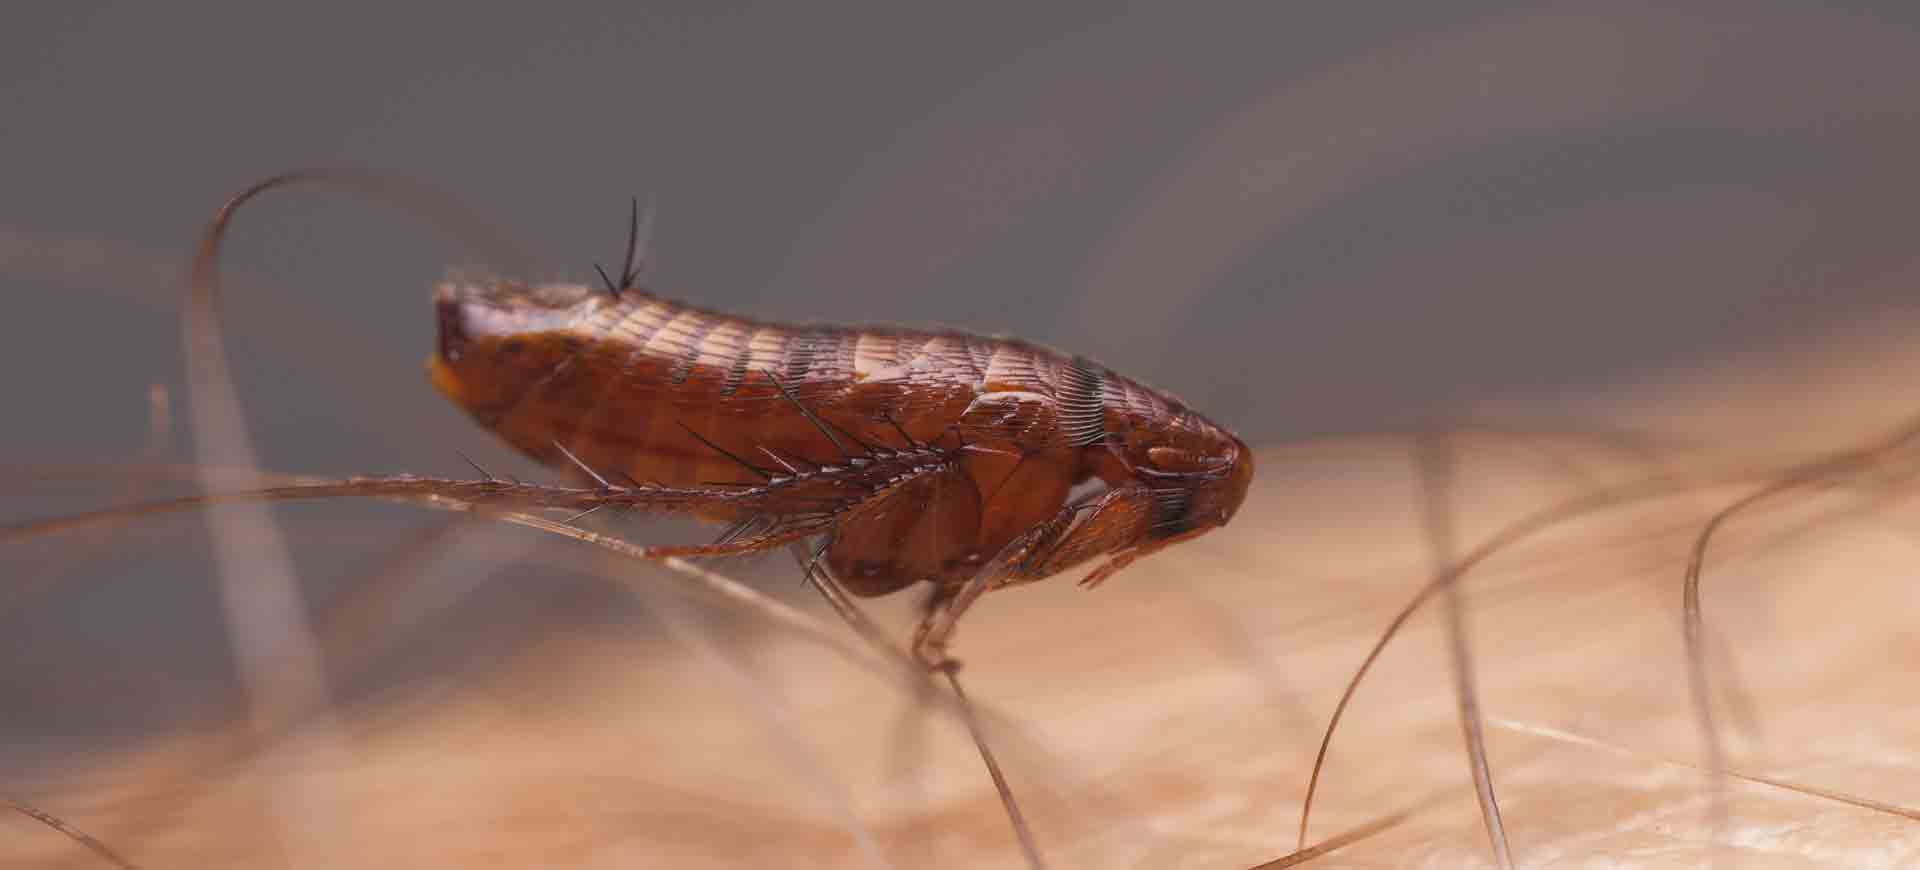 flea pest control national city